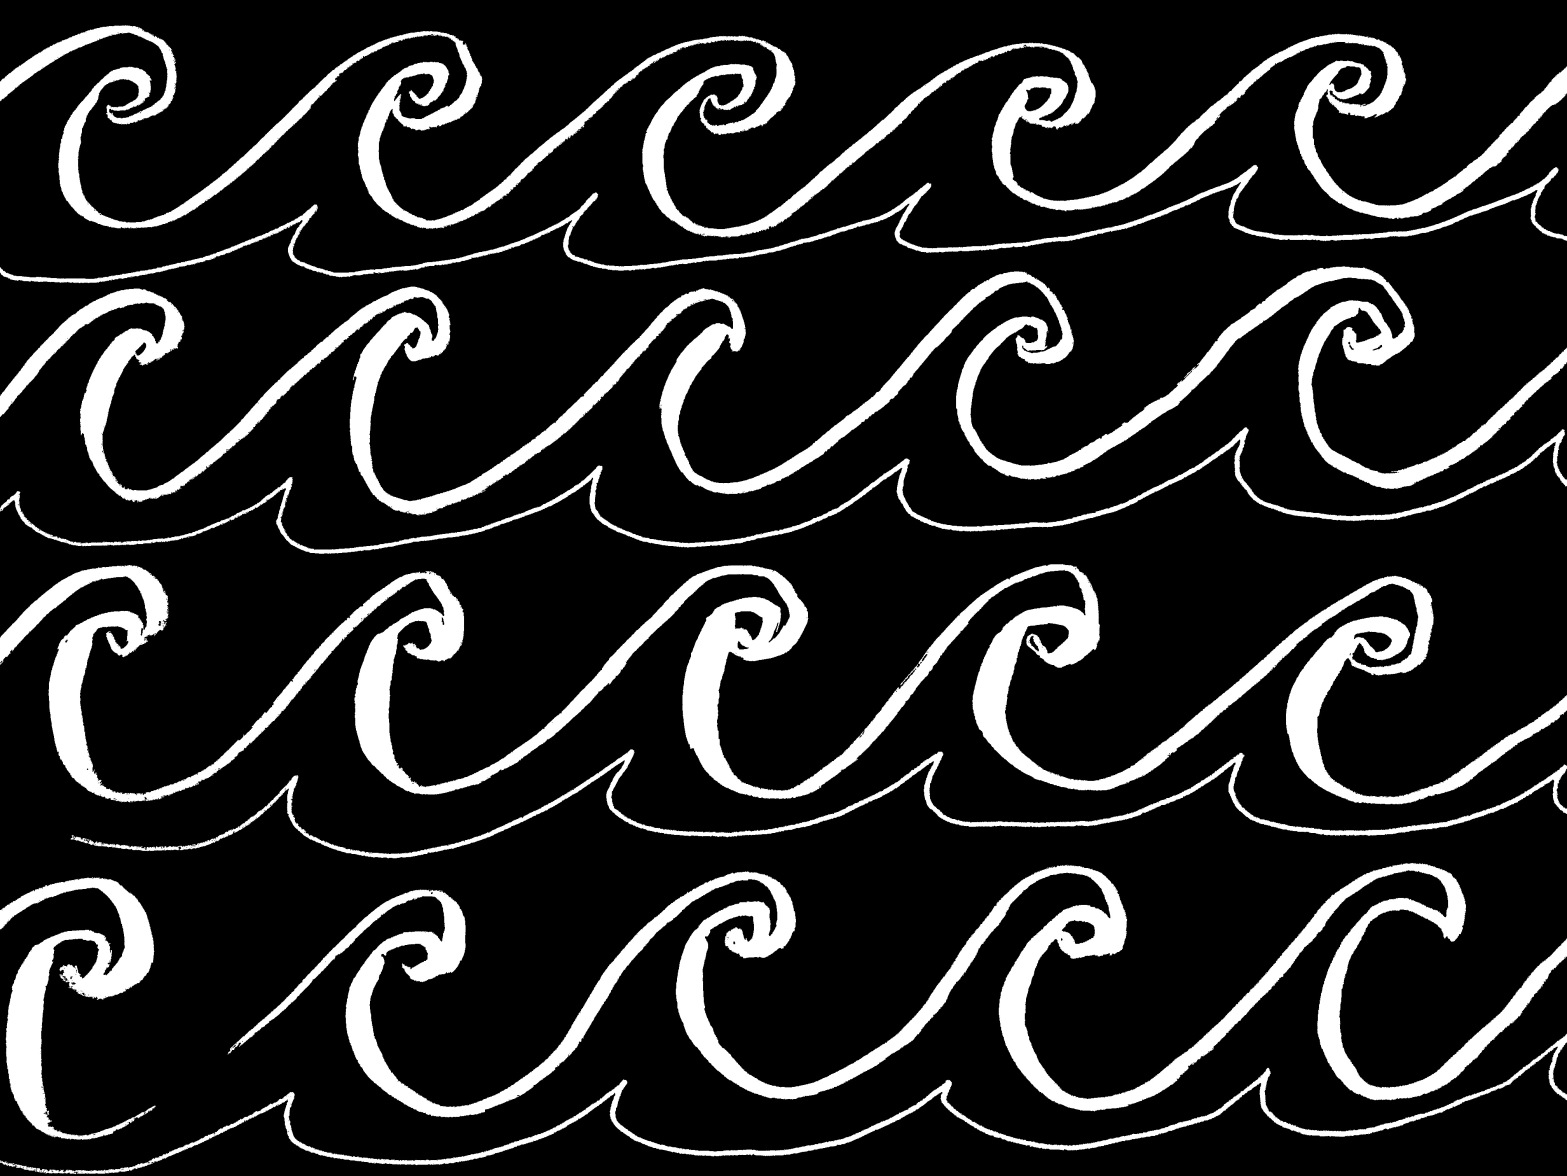 White line drawing on black background of cartoonish waves. Drawing by Caroliena Cabada.